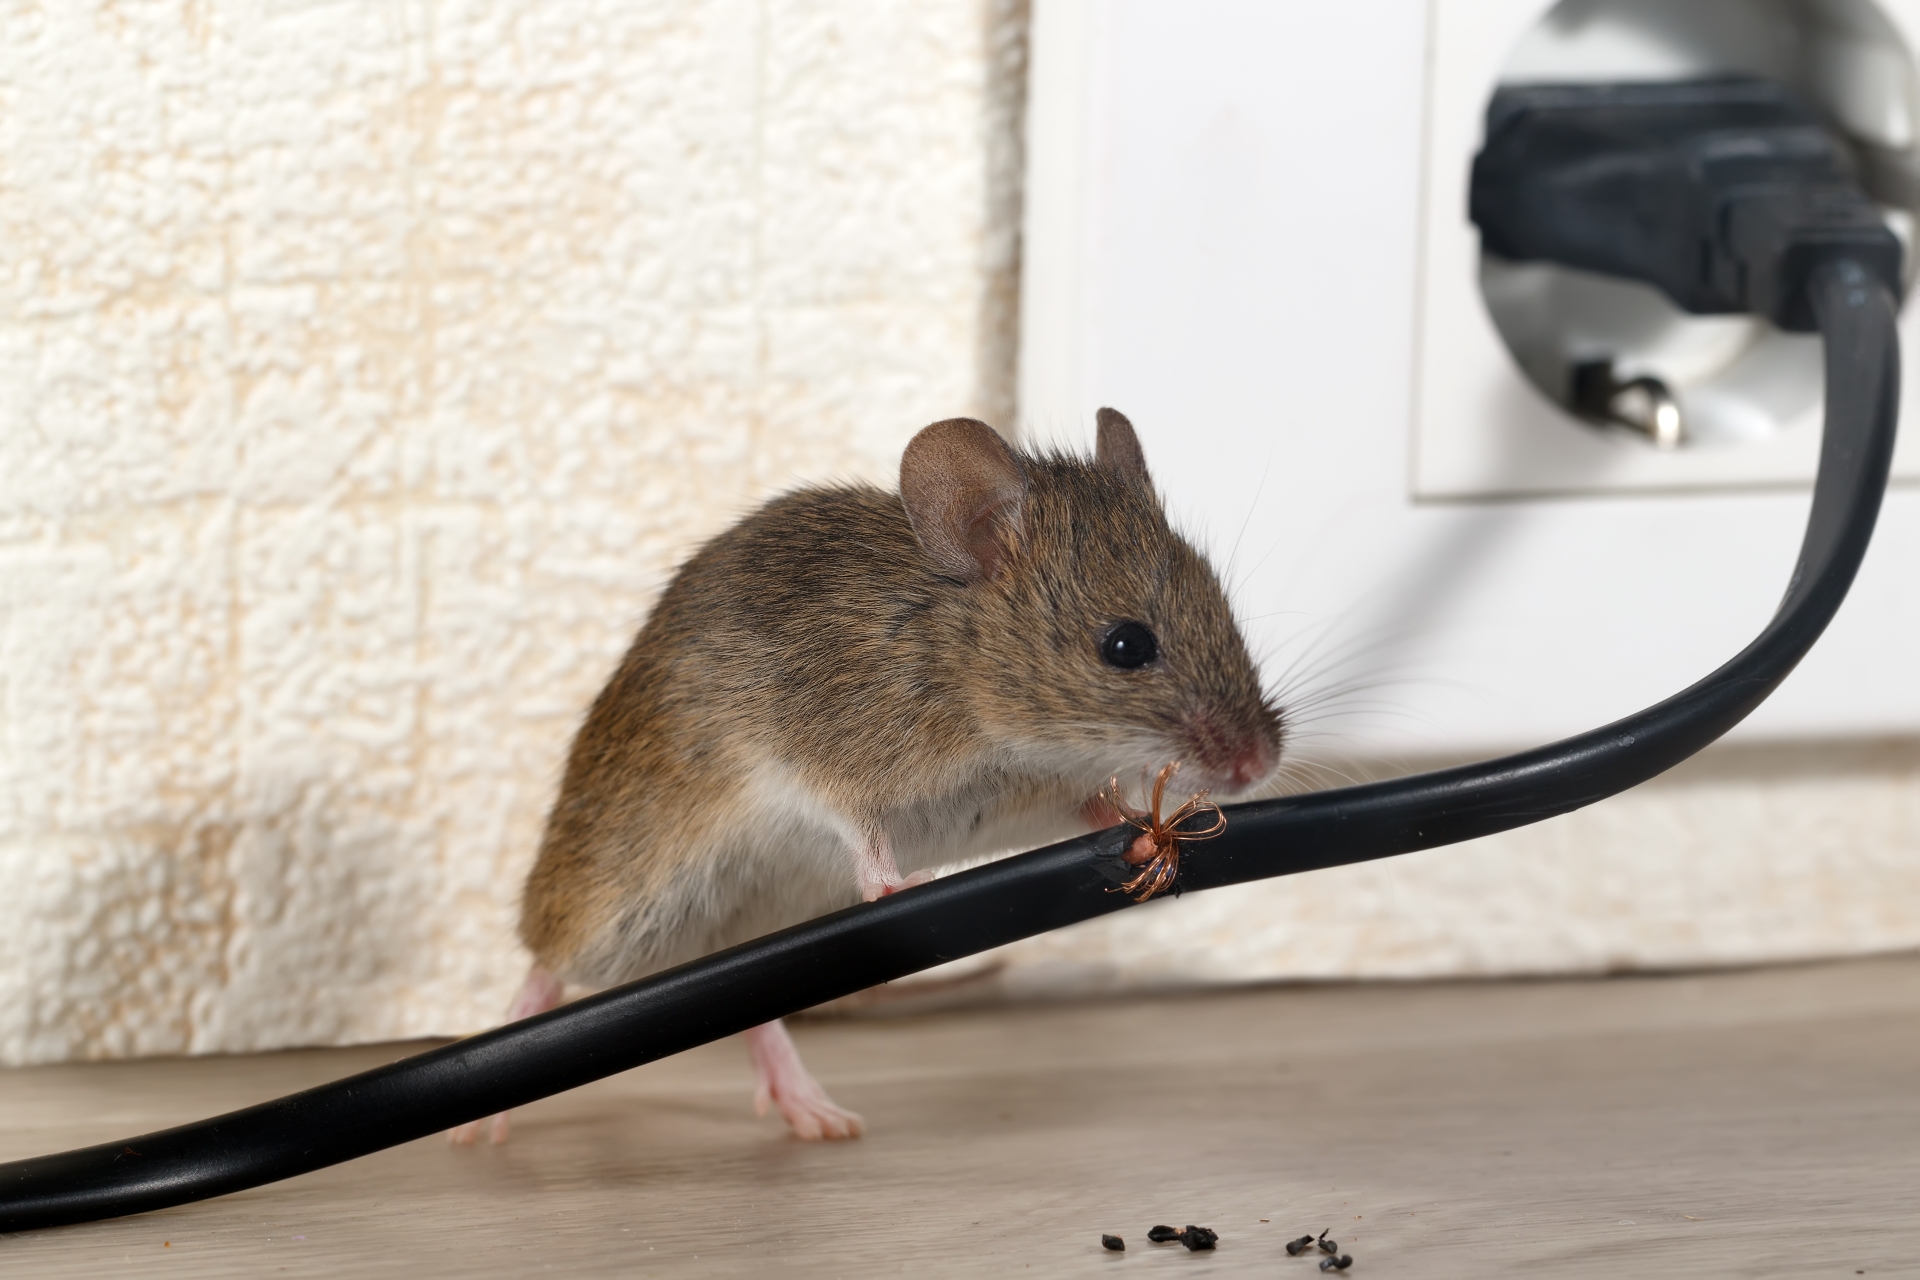 Mice Infestation, Pest Control in Worcester Park, Cuddington, Stoneleigh, KT4. Call Now 020 8166 9746